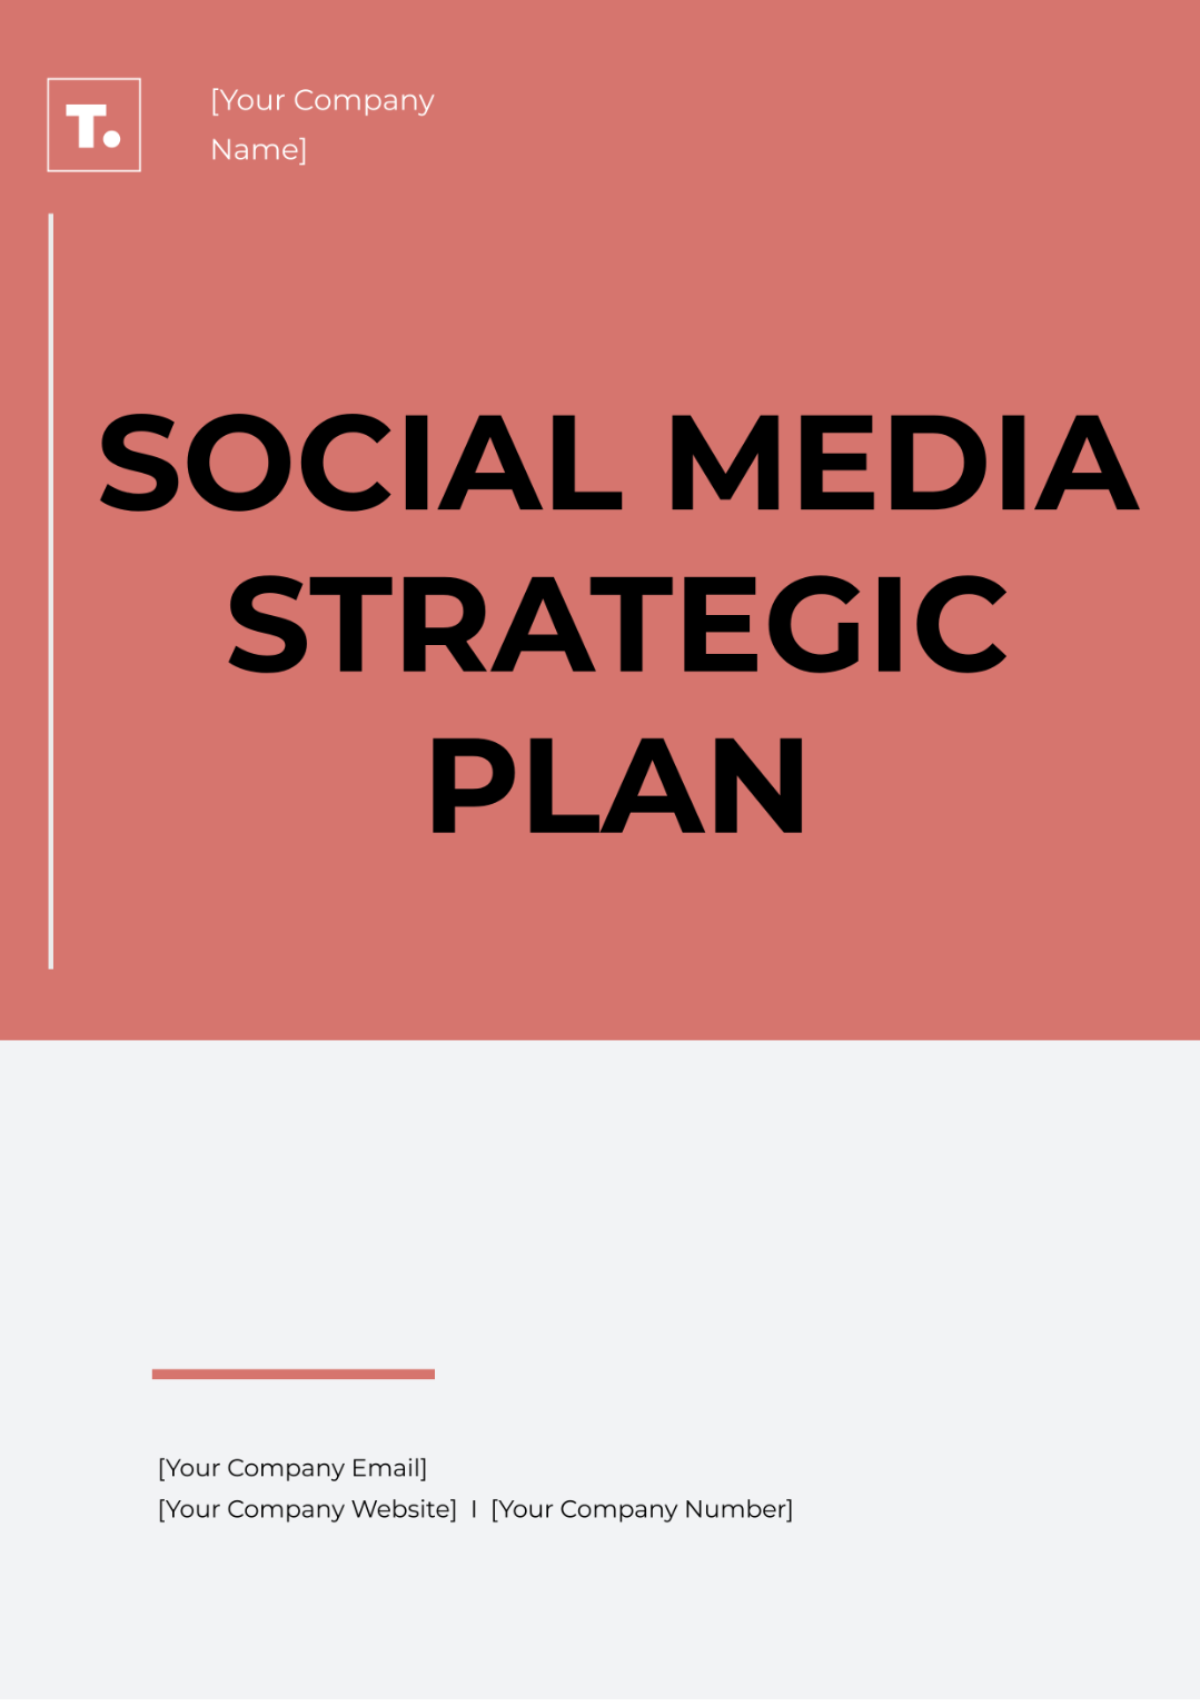 Social Media Strategic Plan Template